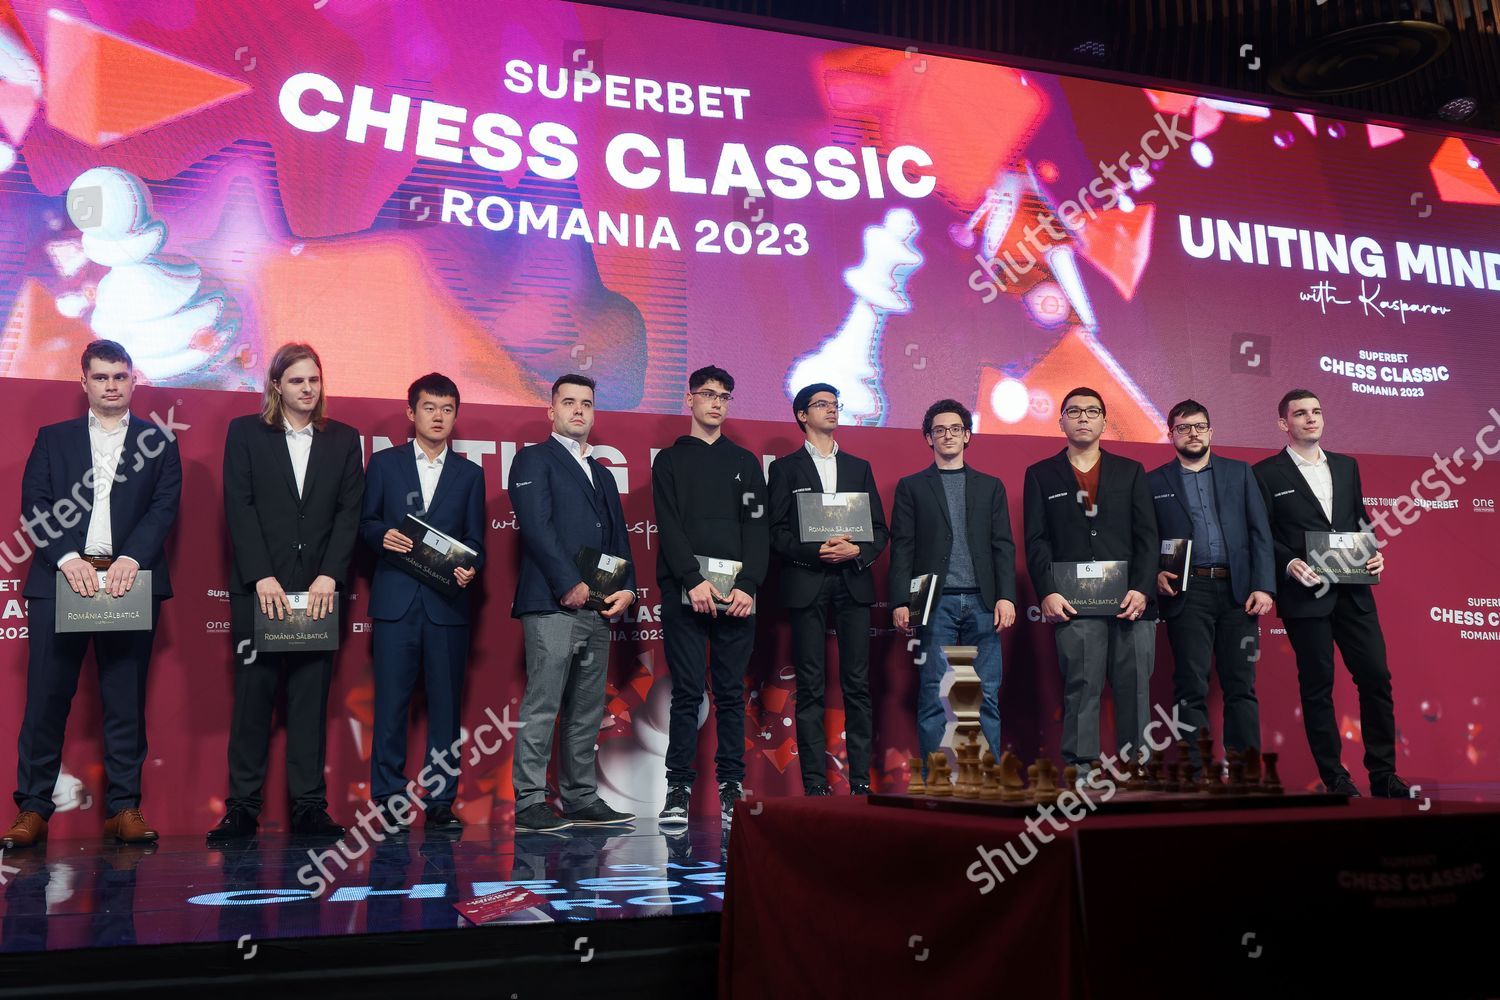 SUPERBET CHESS CLASSIC 2023: Richard Rapport VS. Jan- Krzysztof Duda